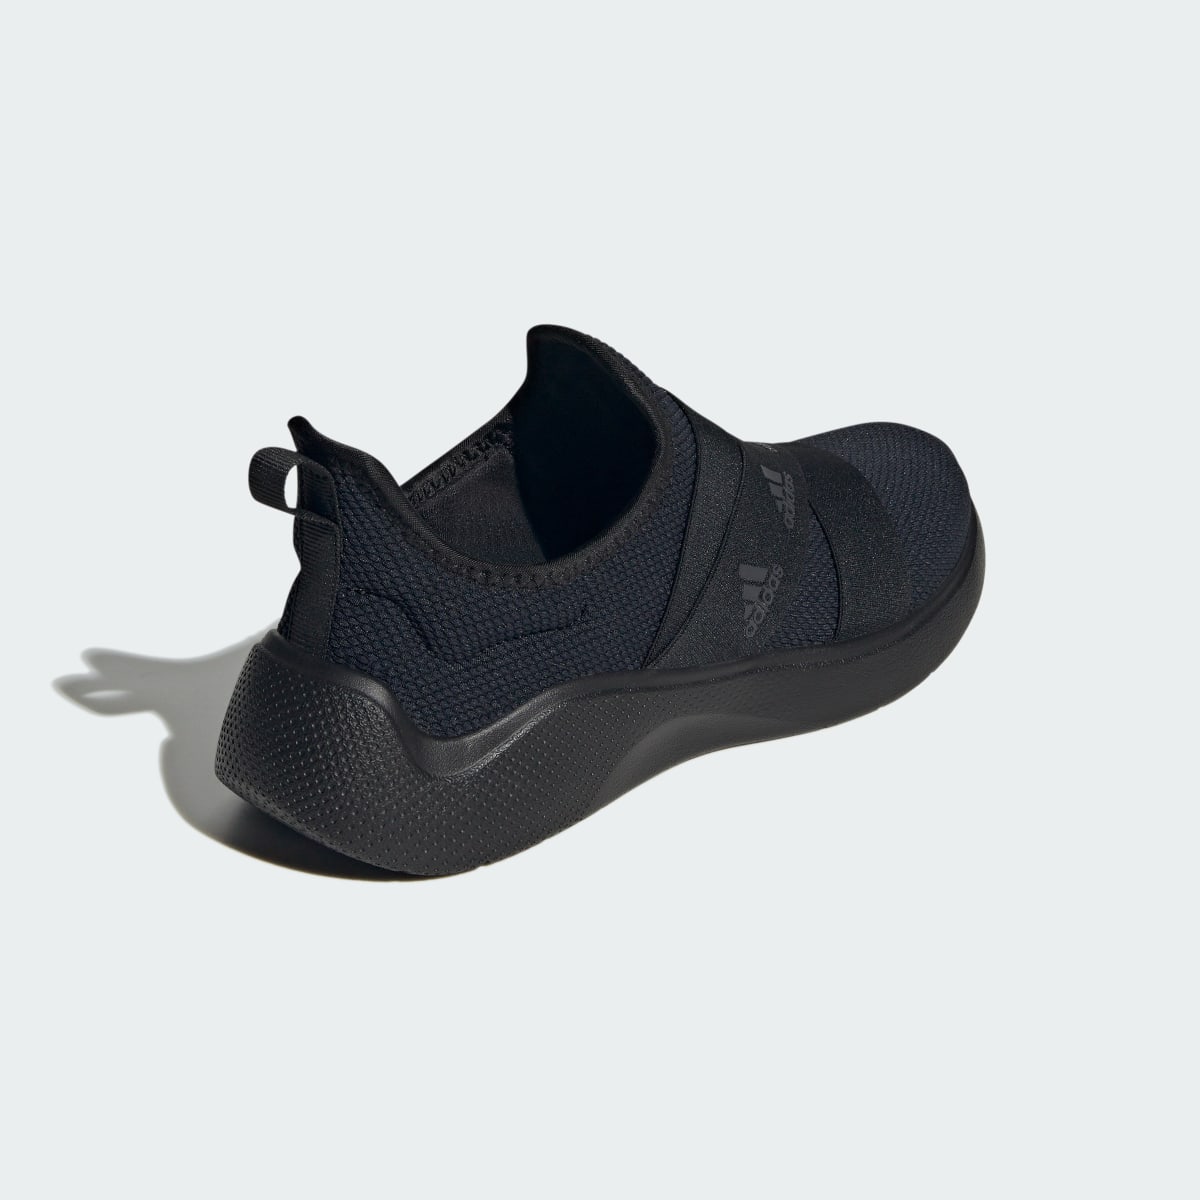 Adidas Puremotion Adapt Shoes. 6